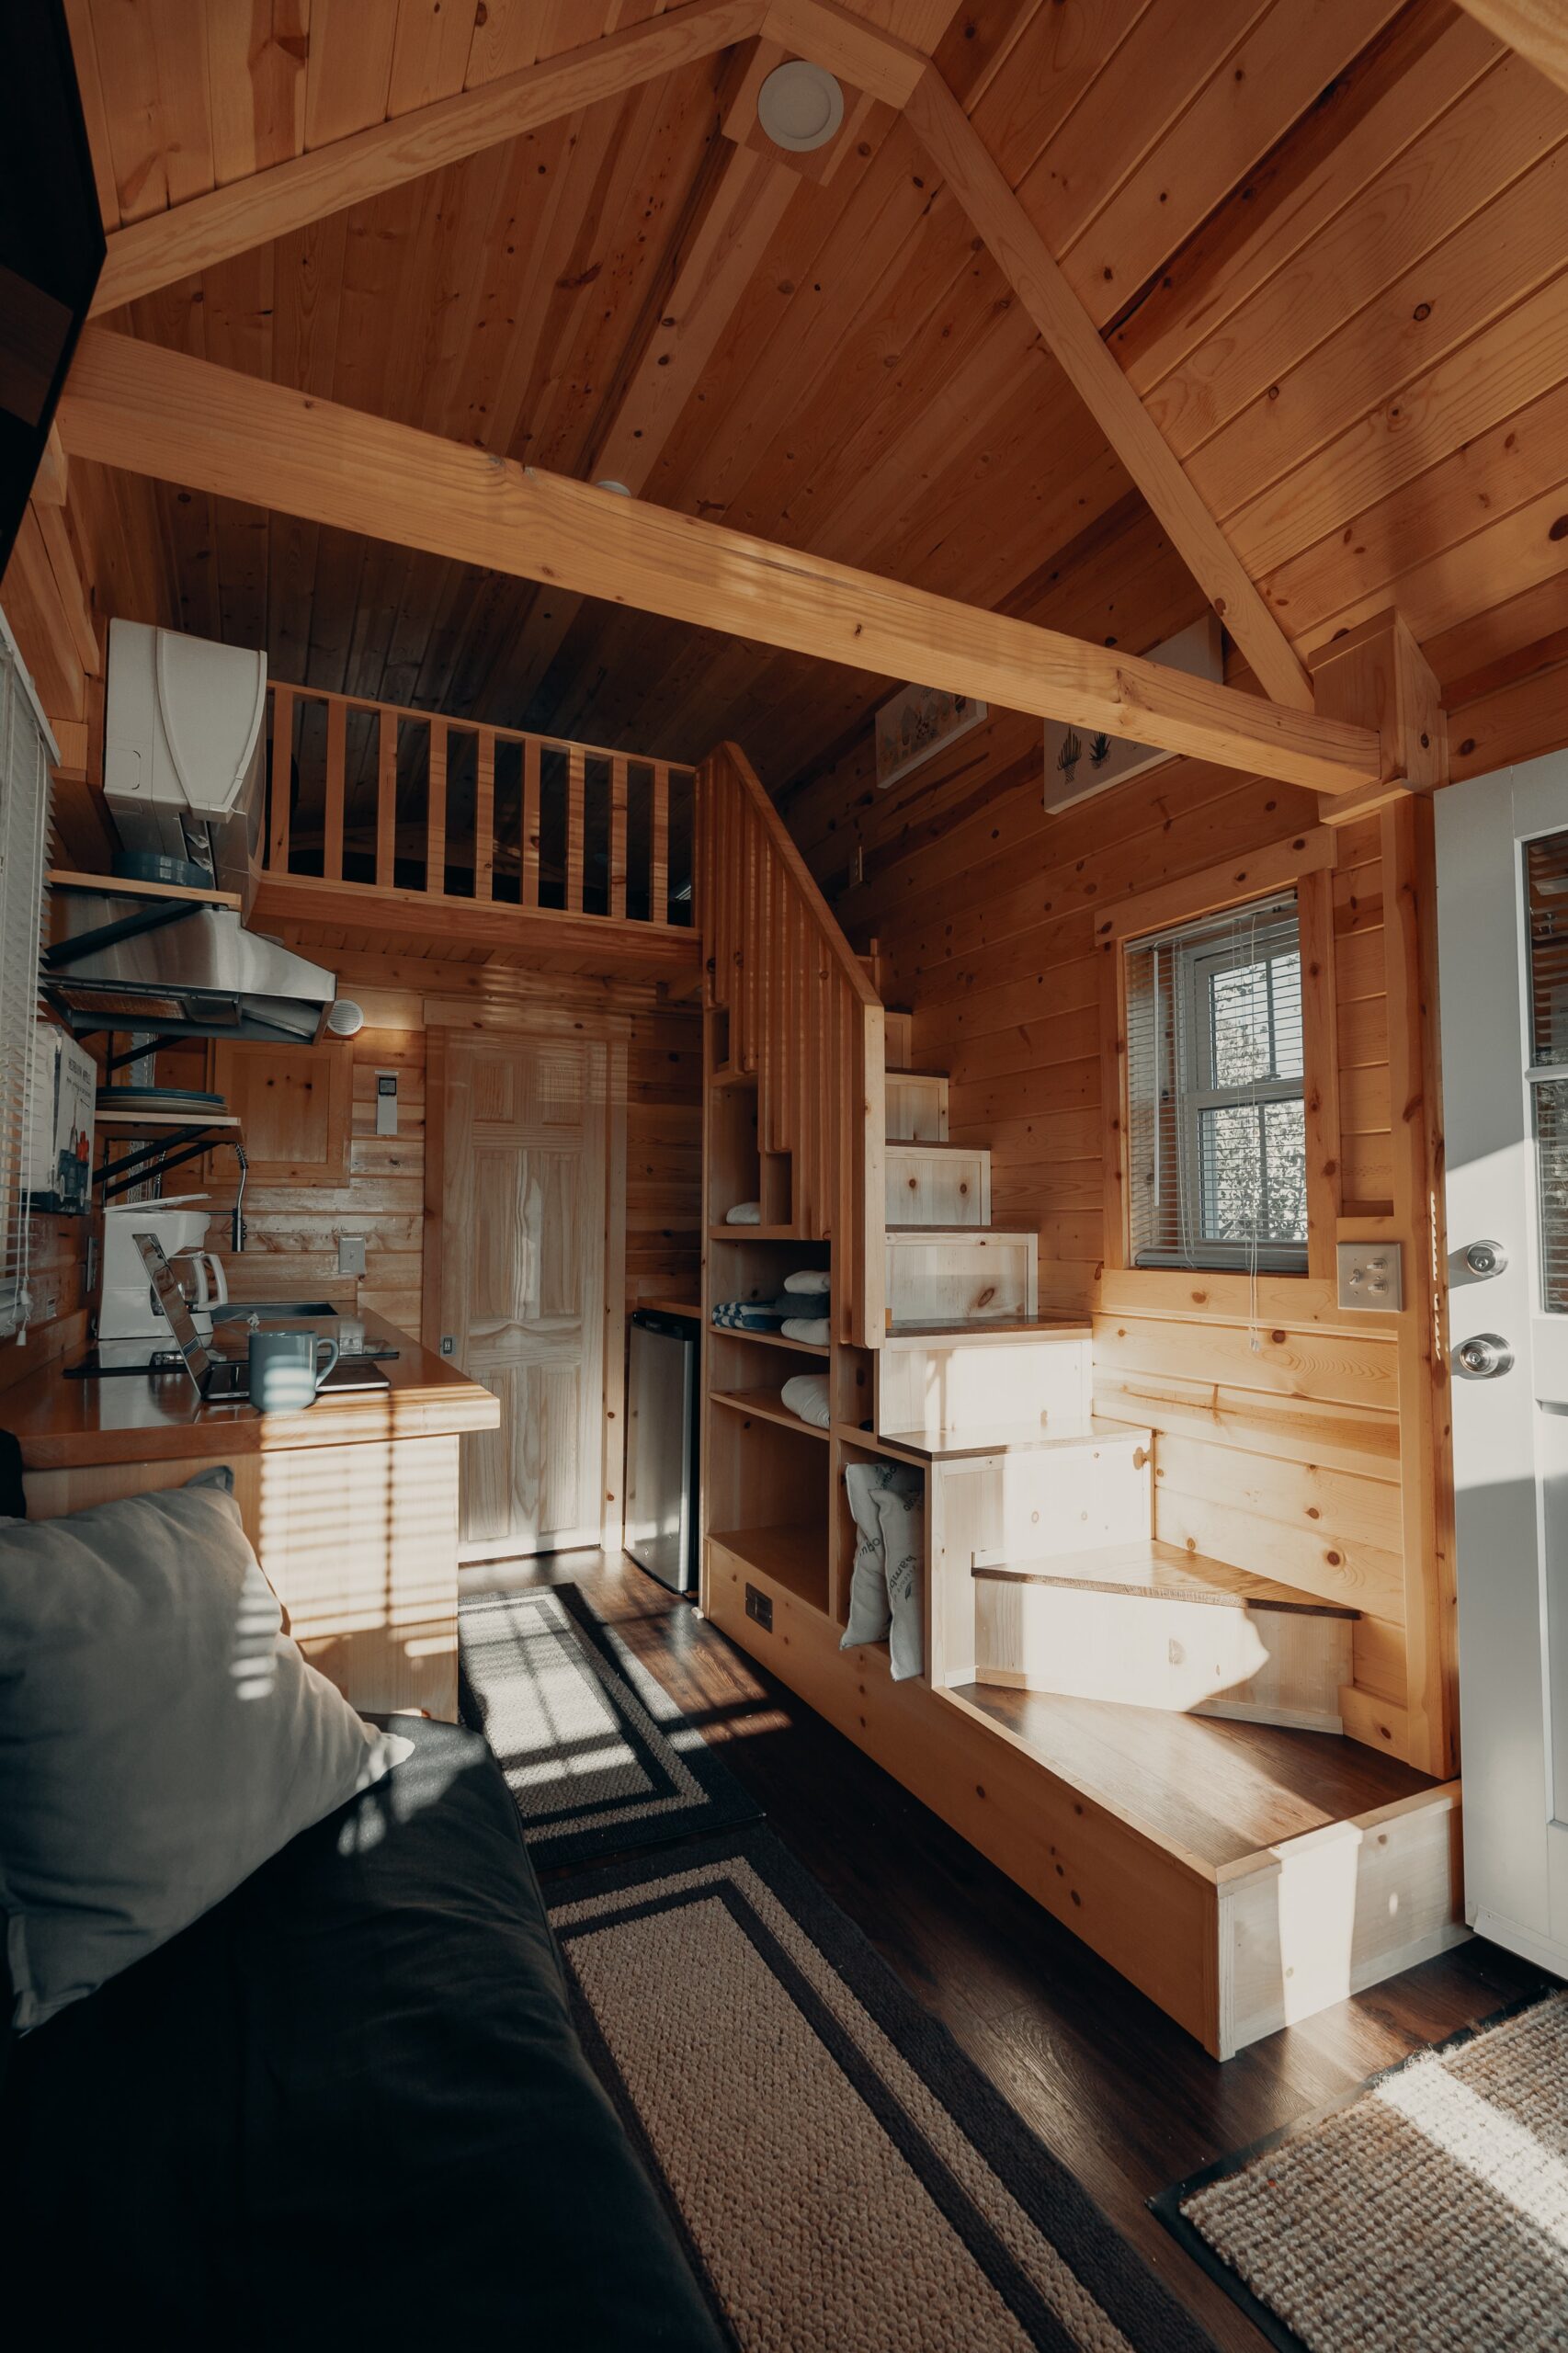 Tiny Home with loft bedroom